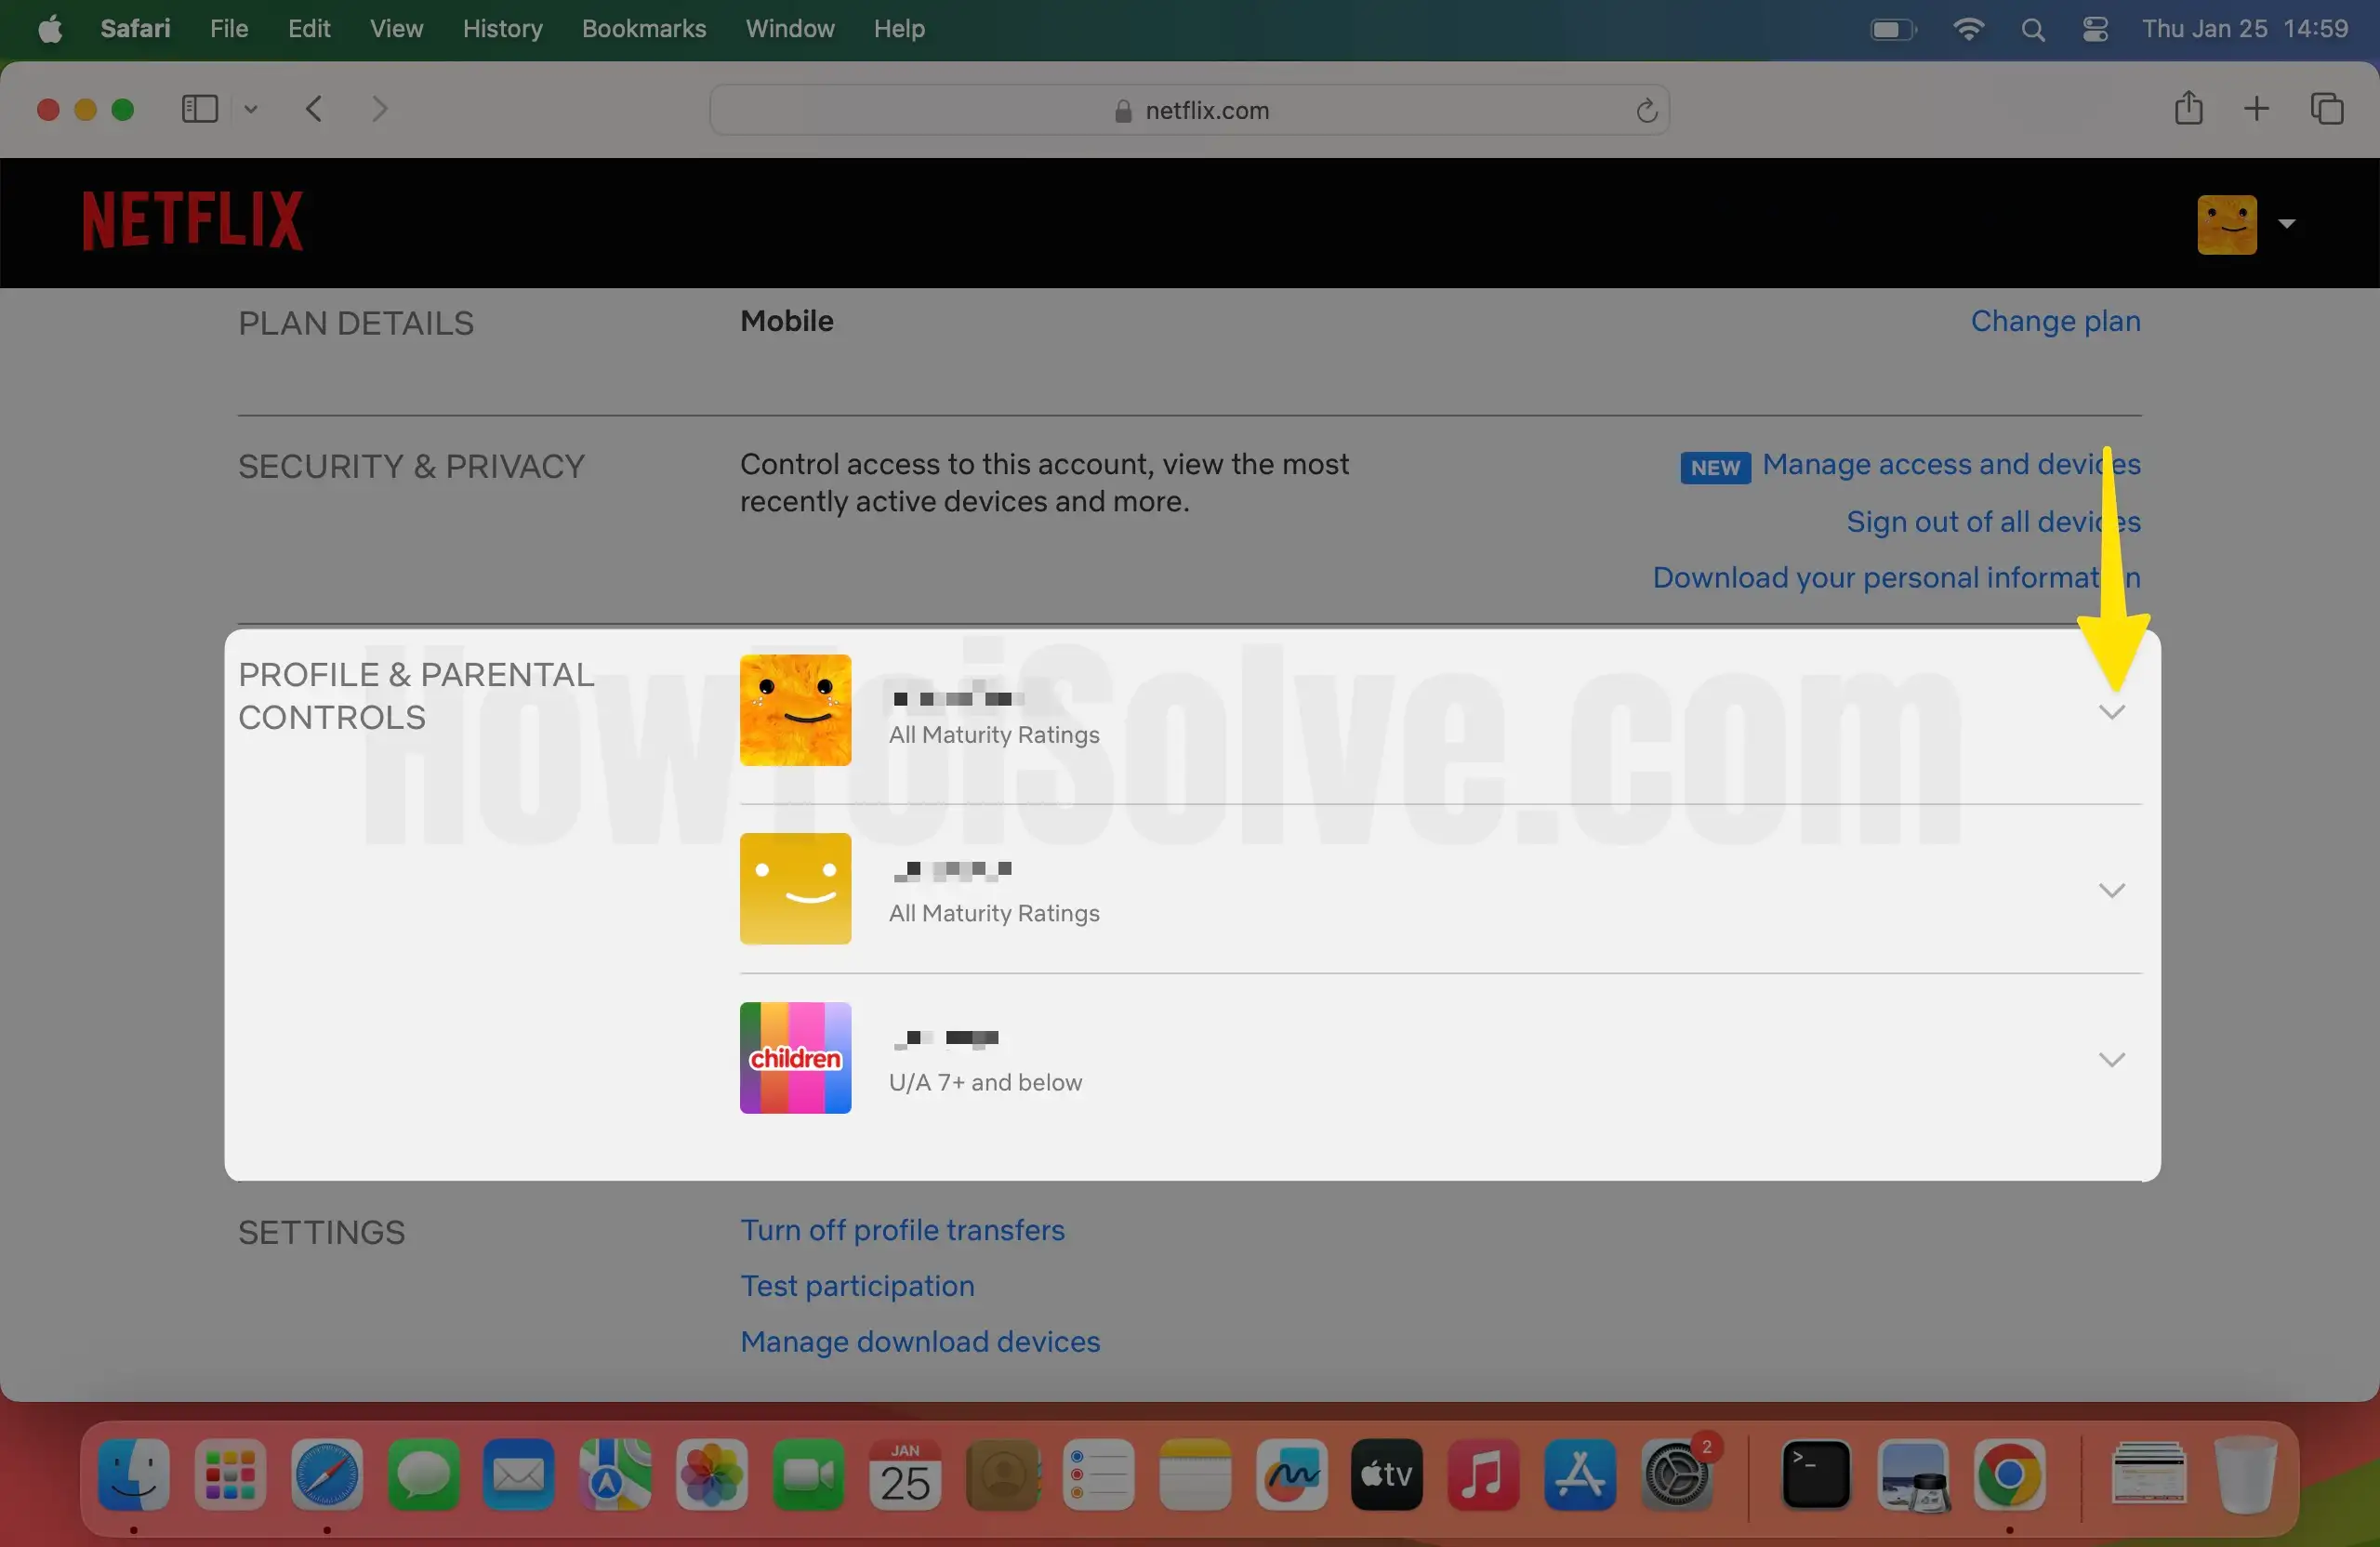 Swipe down to Profile & Parental Controls Menu select Desired profile on Mac